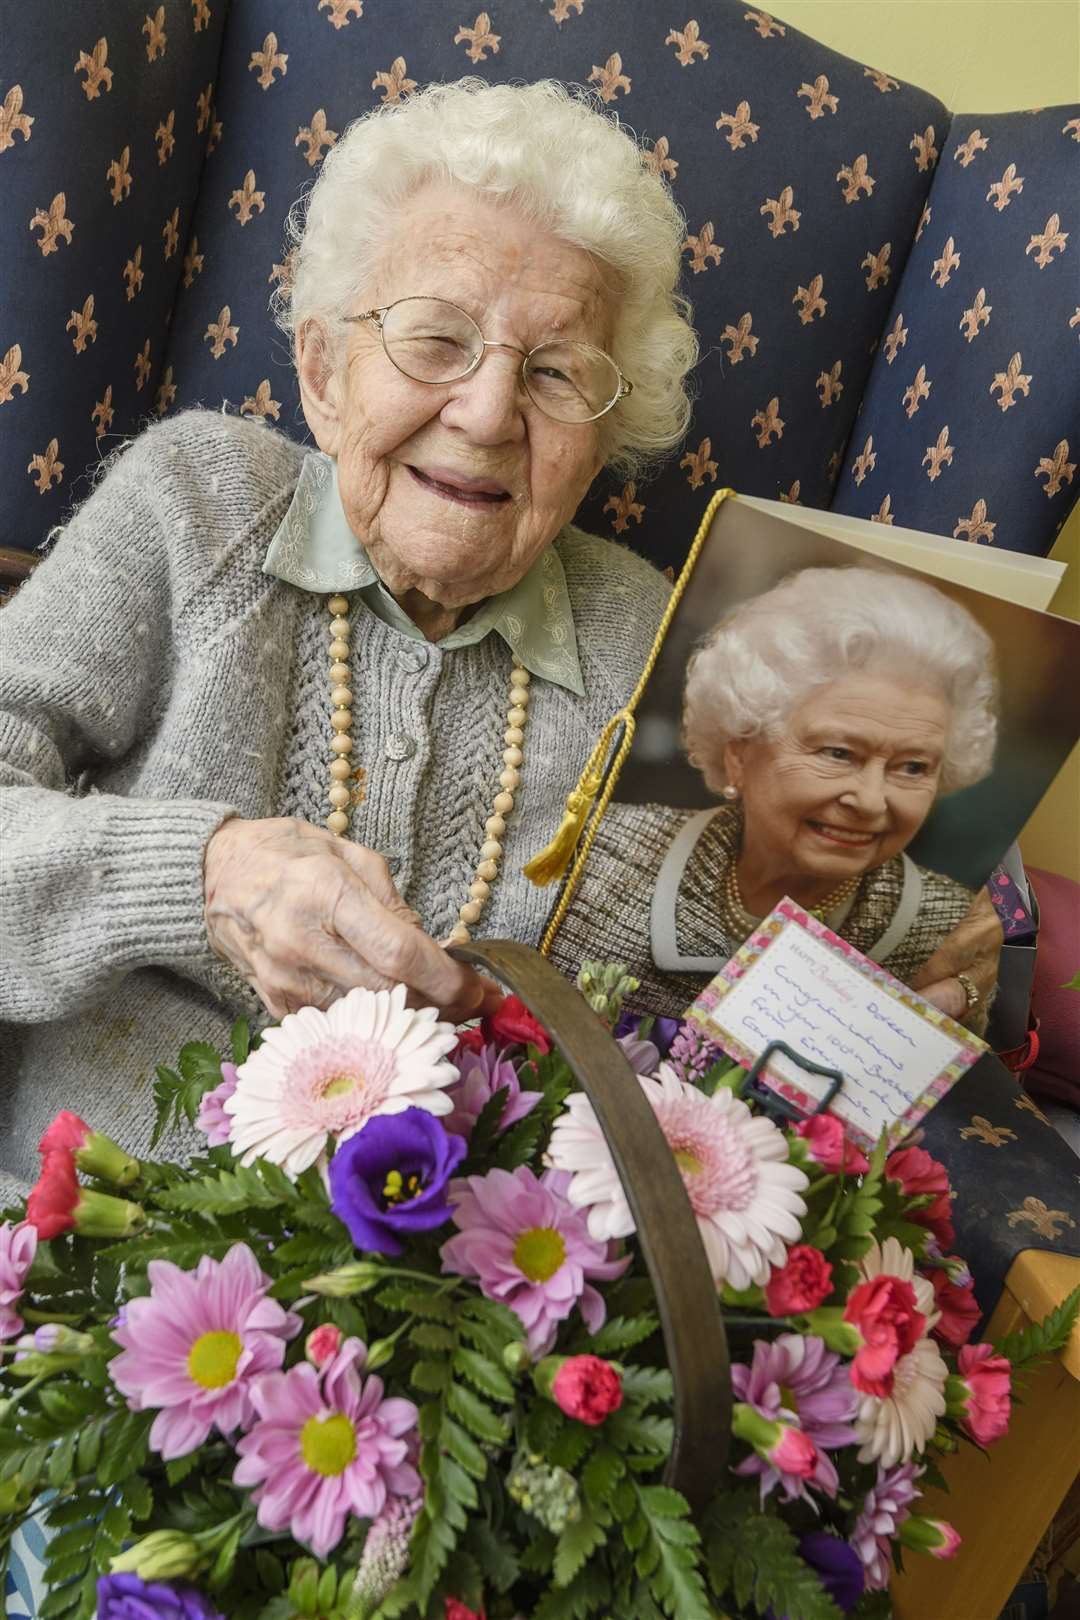 Doreen Halliday, of Gardenia House, Pilgrims Court, Dartford, is 100 years old